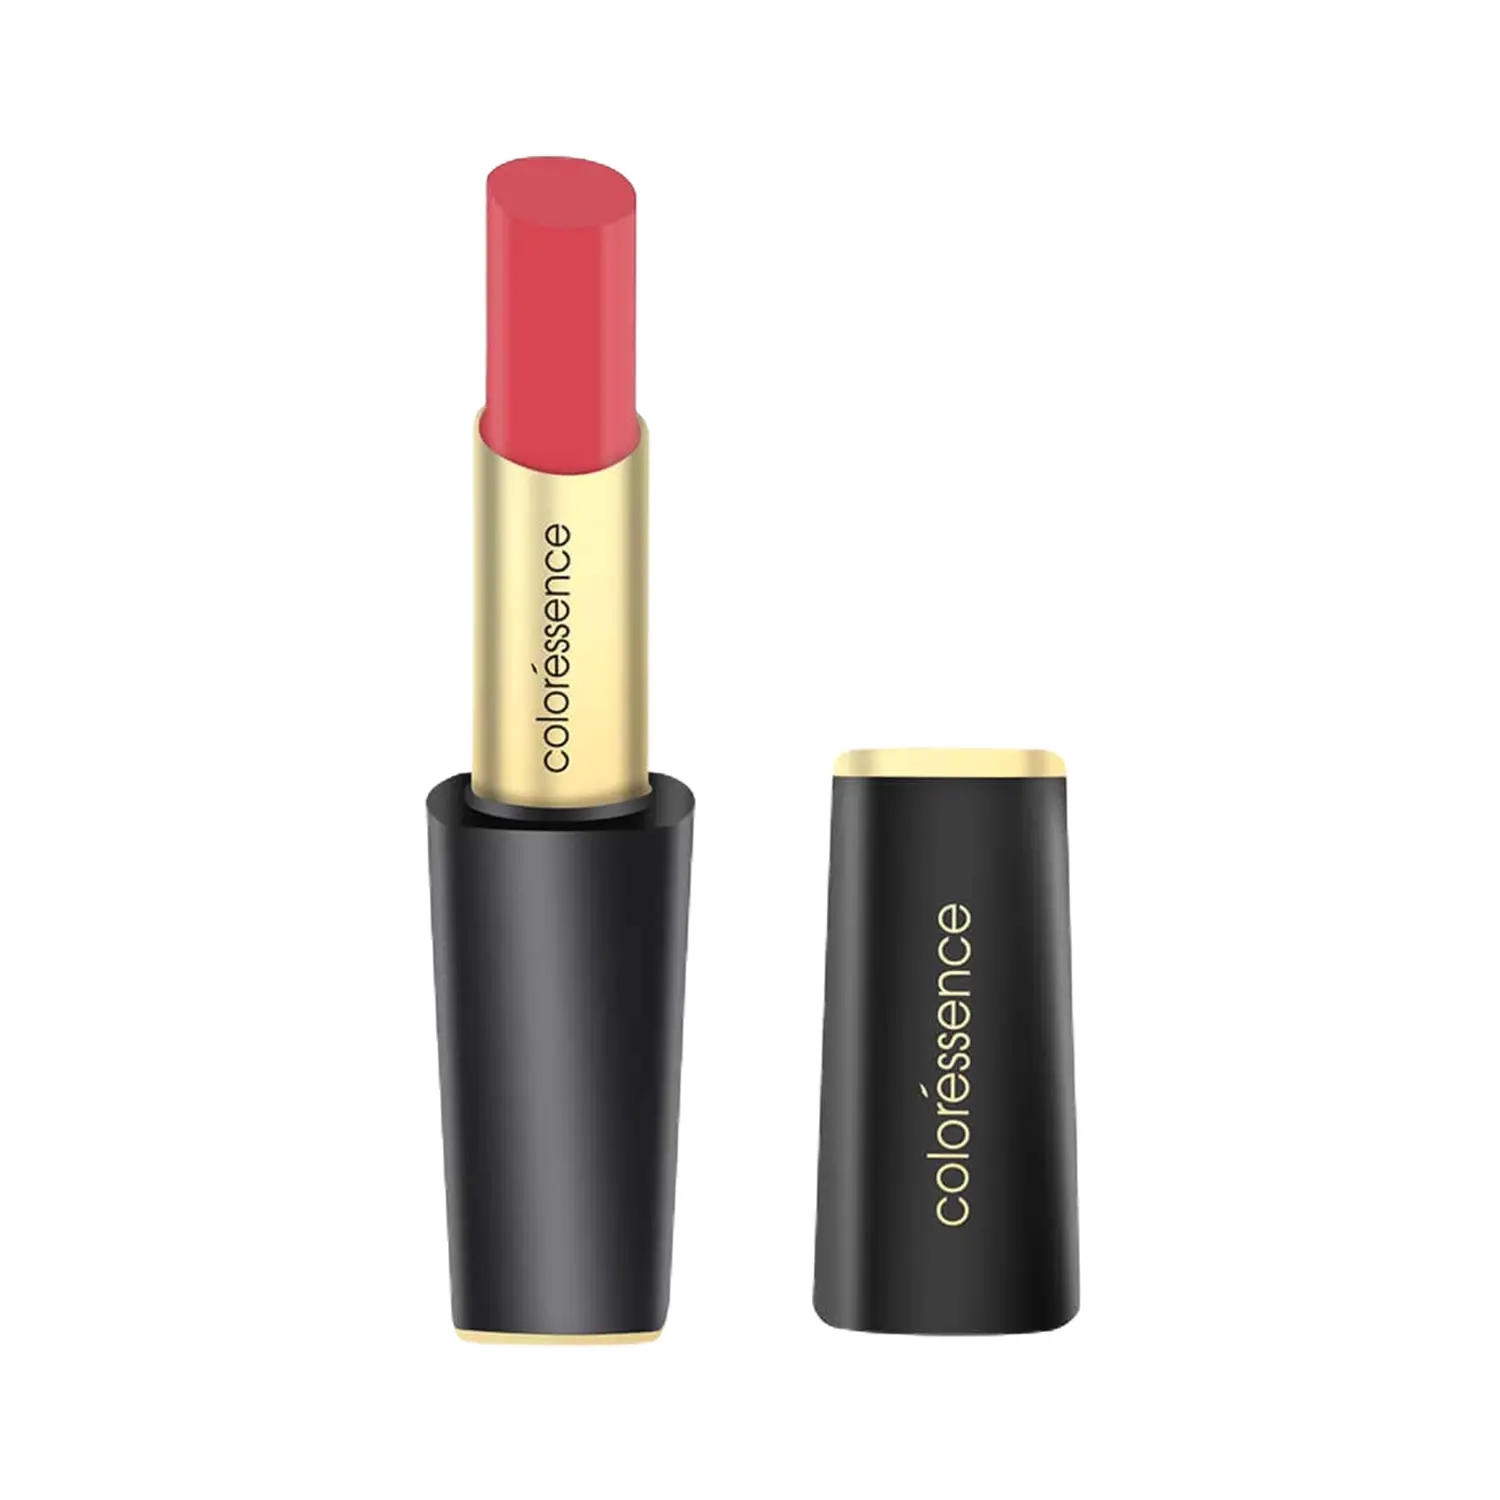 Coloressence | Coloressence Intense Long Wear Lip Color Glossy Lipstick - Peach Fizz (2.5g)